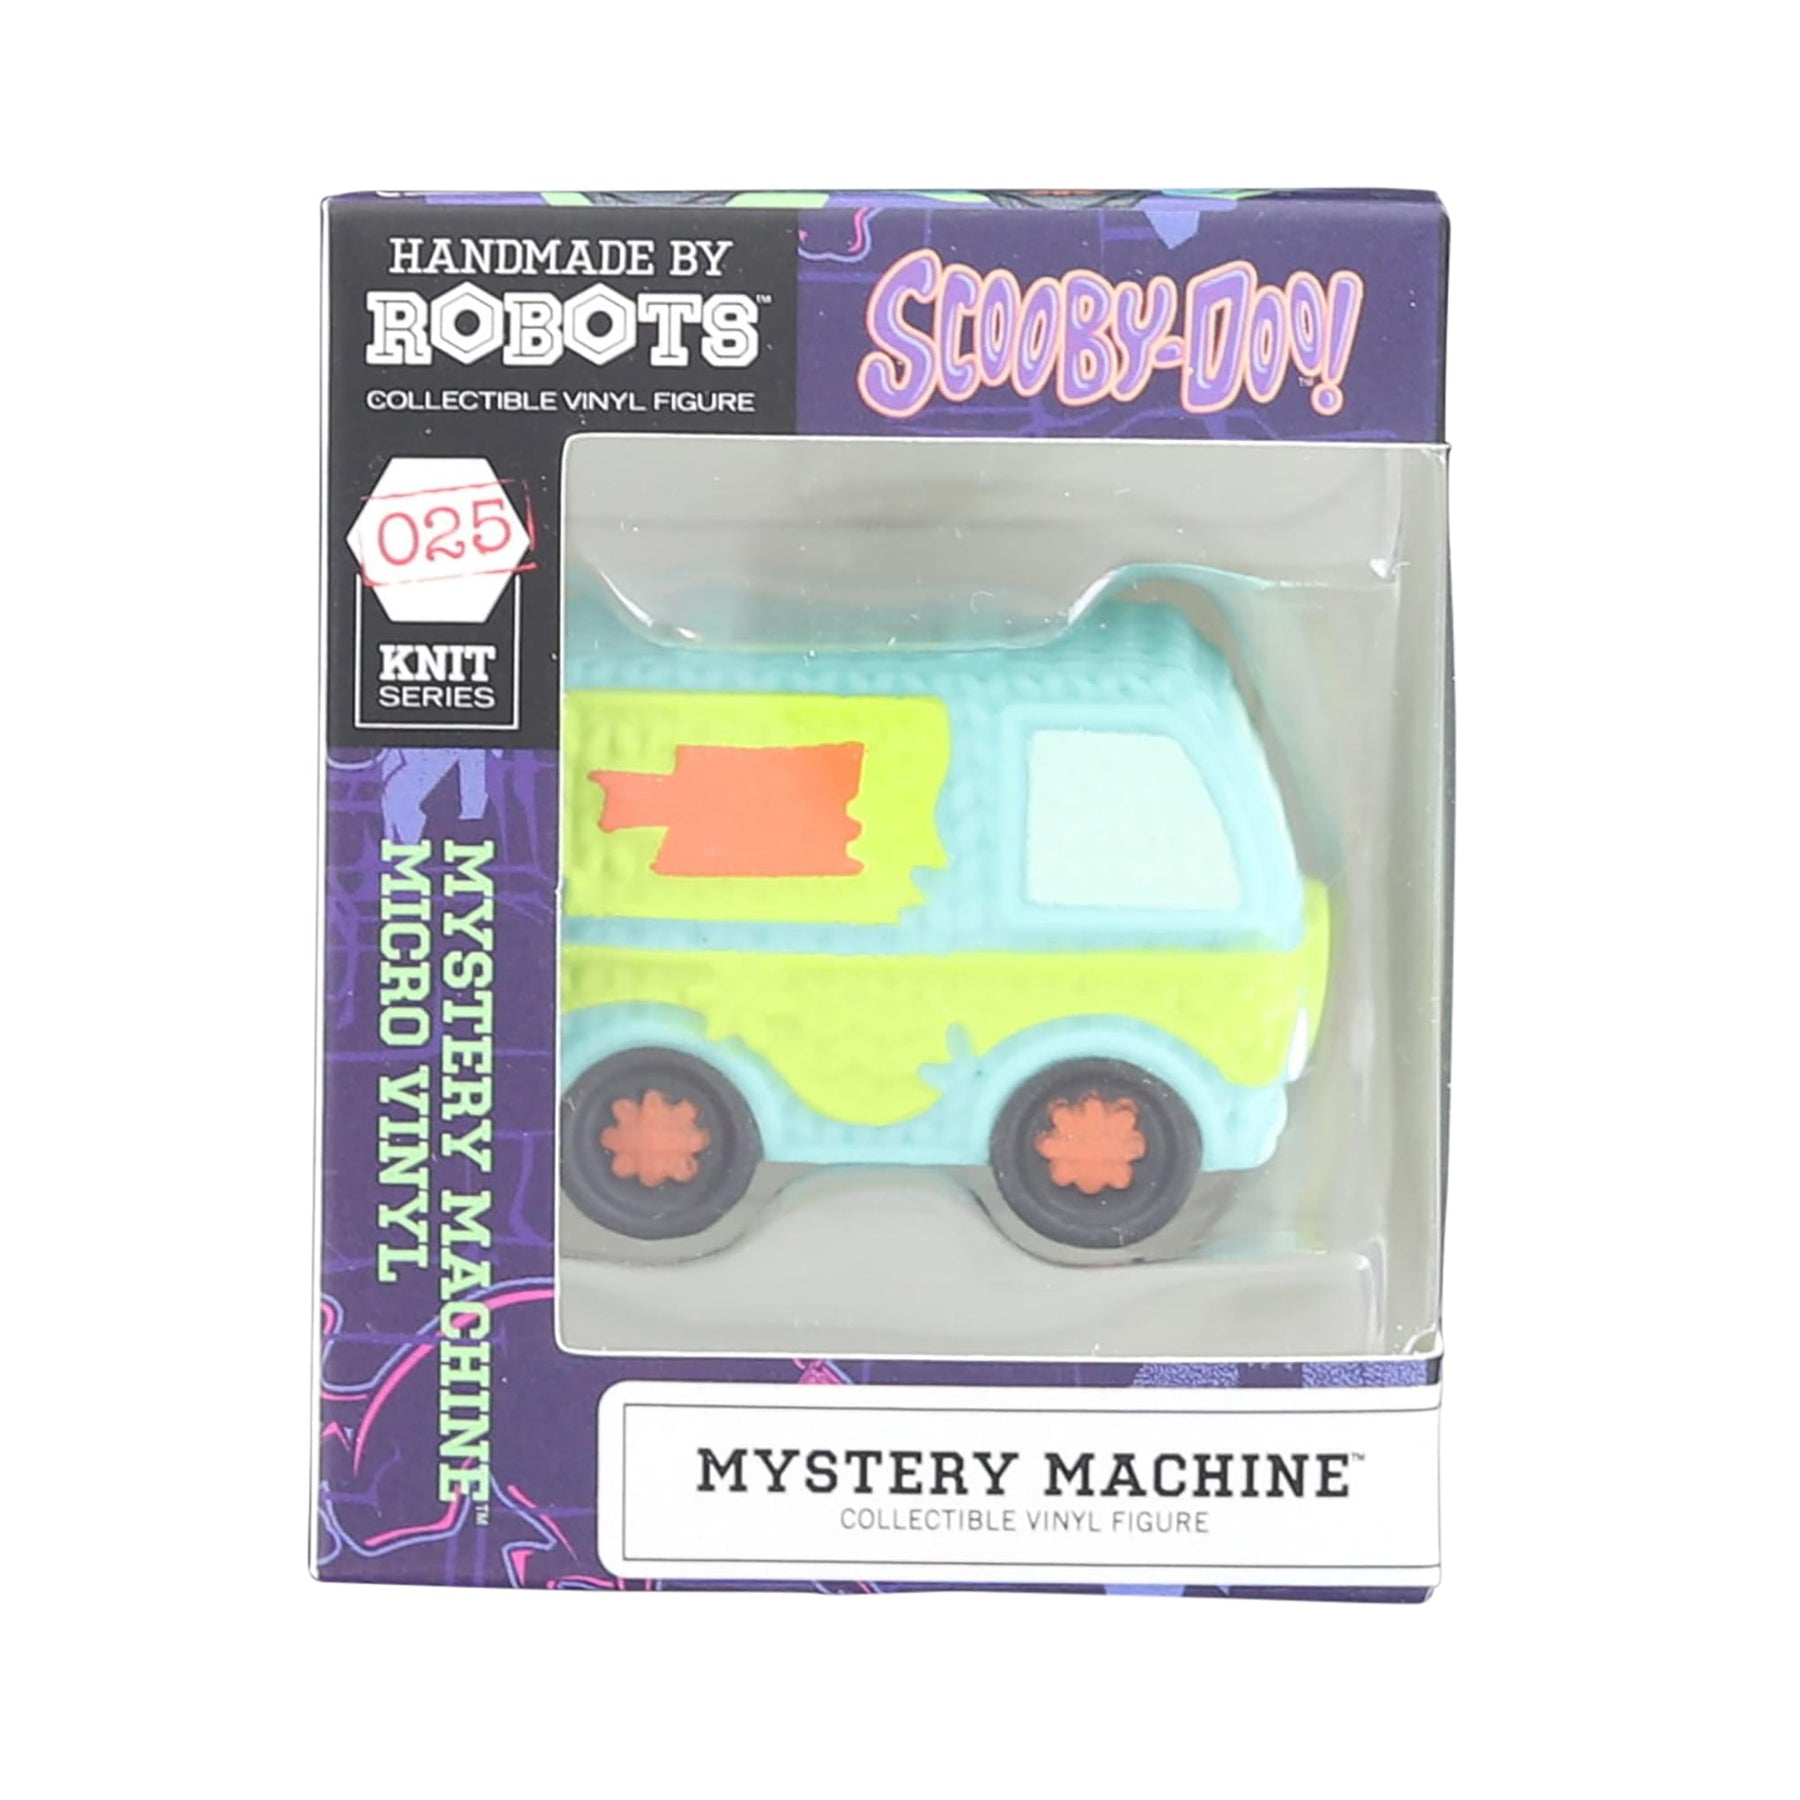 Scooby-Doo Handmade by Robots 1.75 Inch Micro Vinyl Figure | Mystery Machine